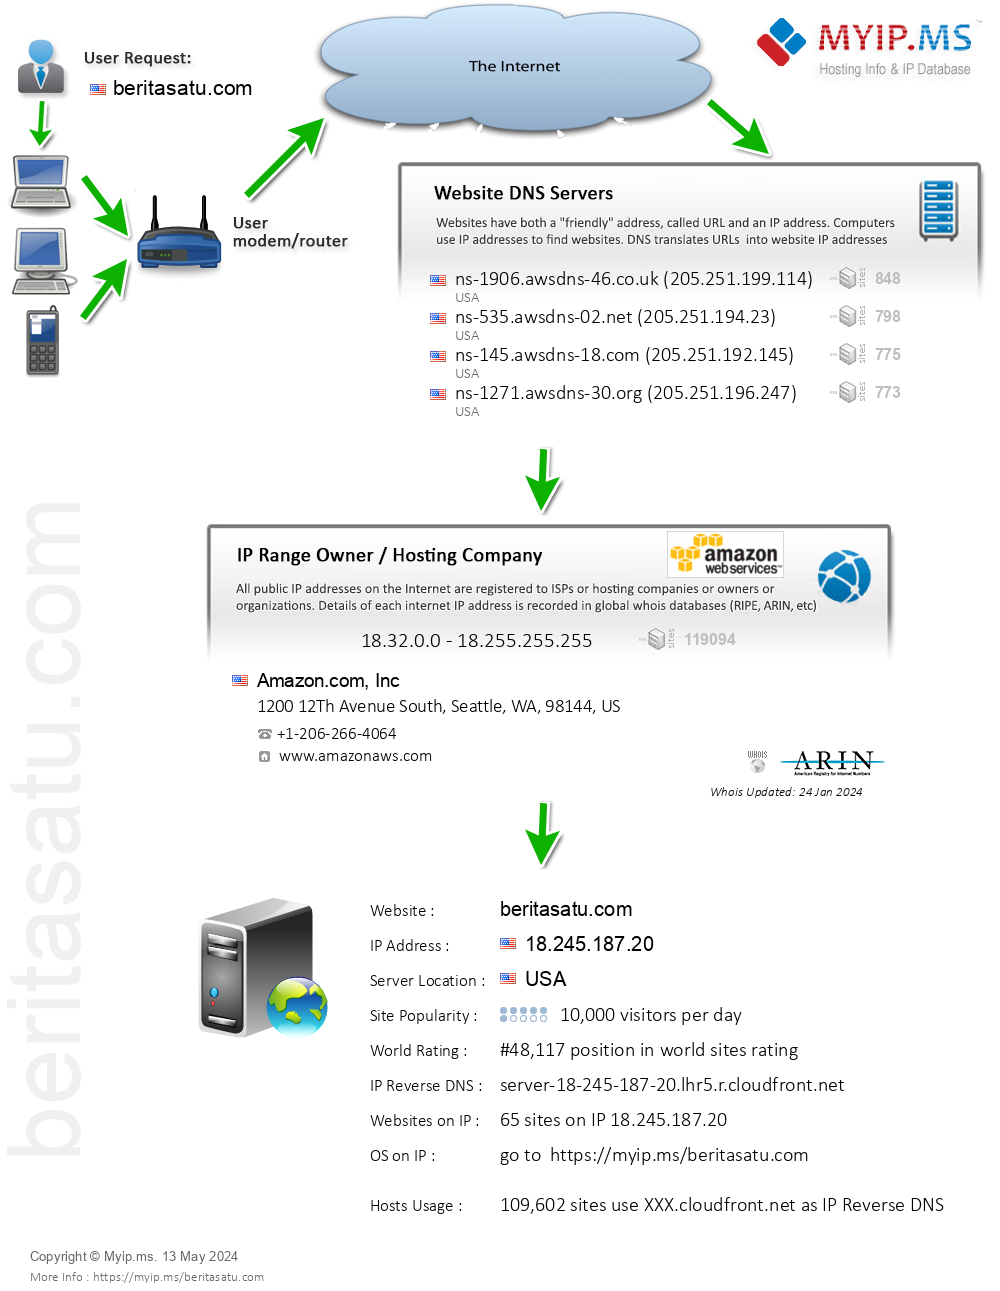 Beritasatu.com - Website Hosting Visual IP Diagram